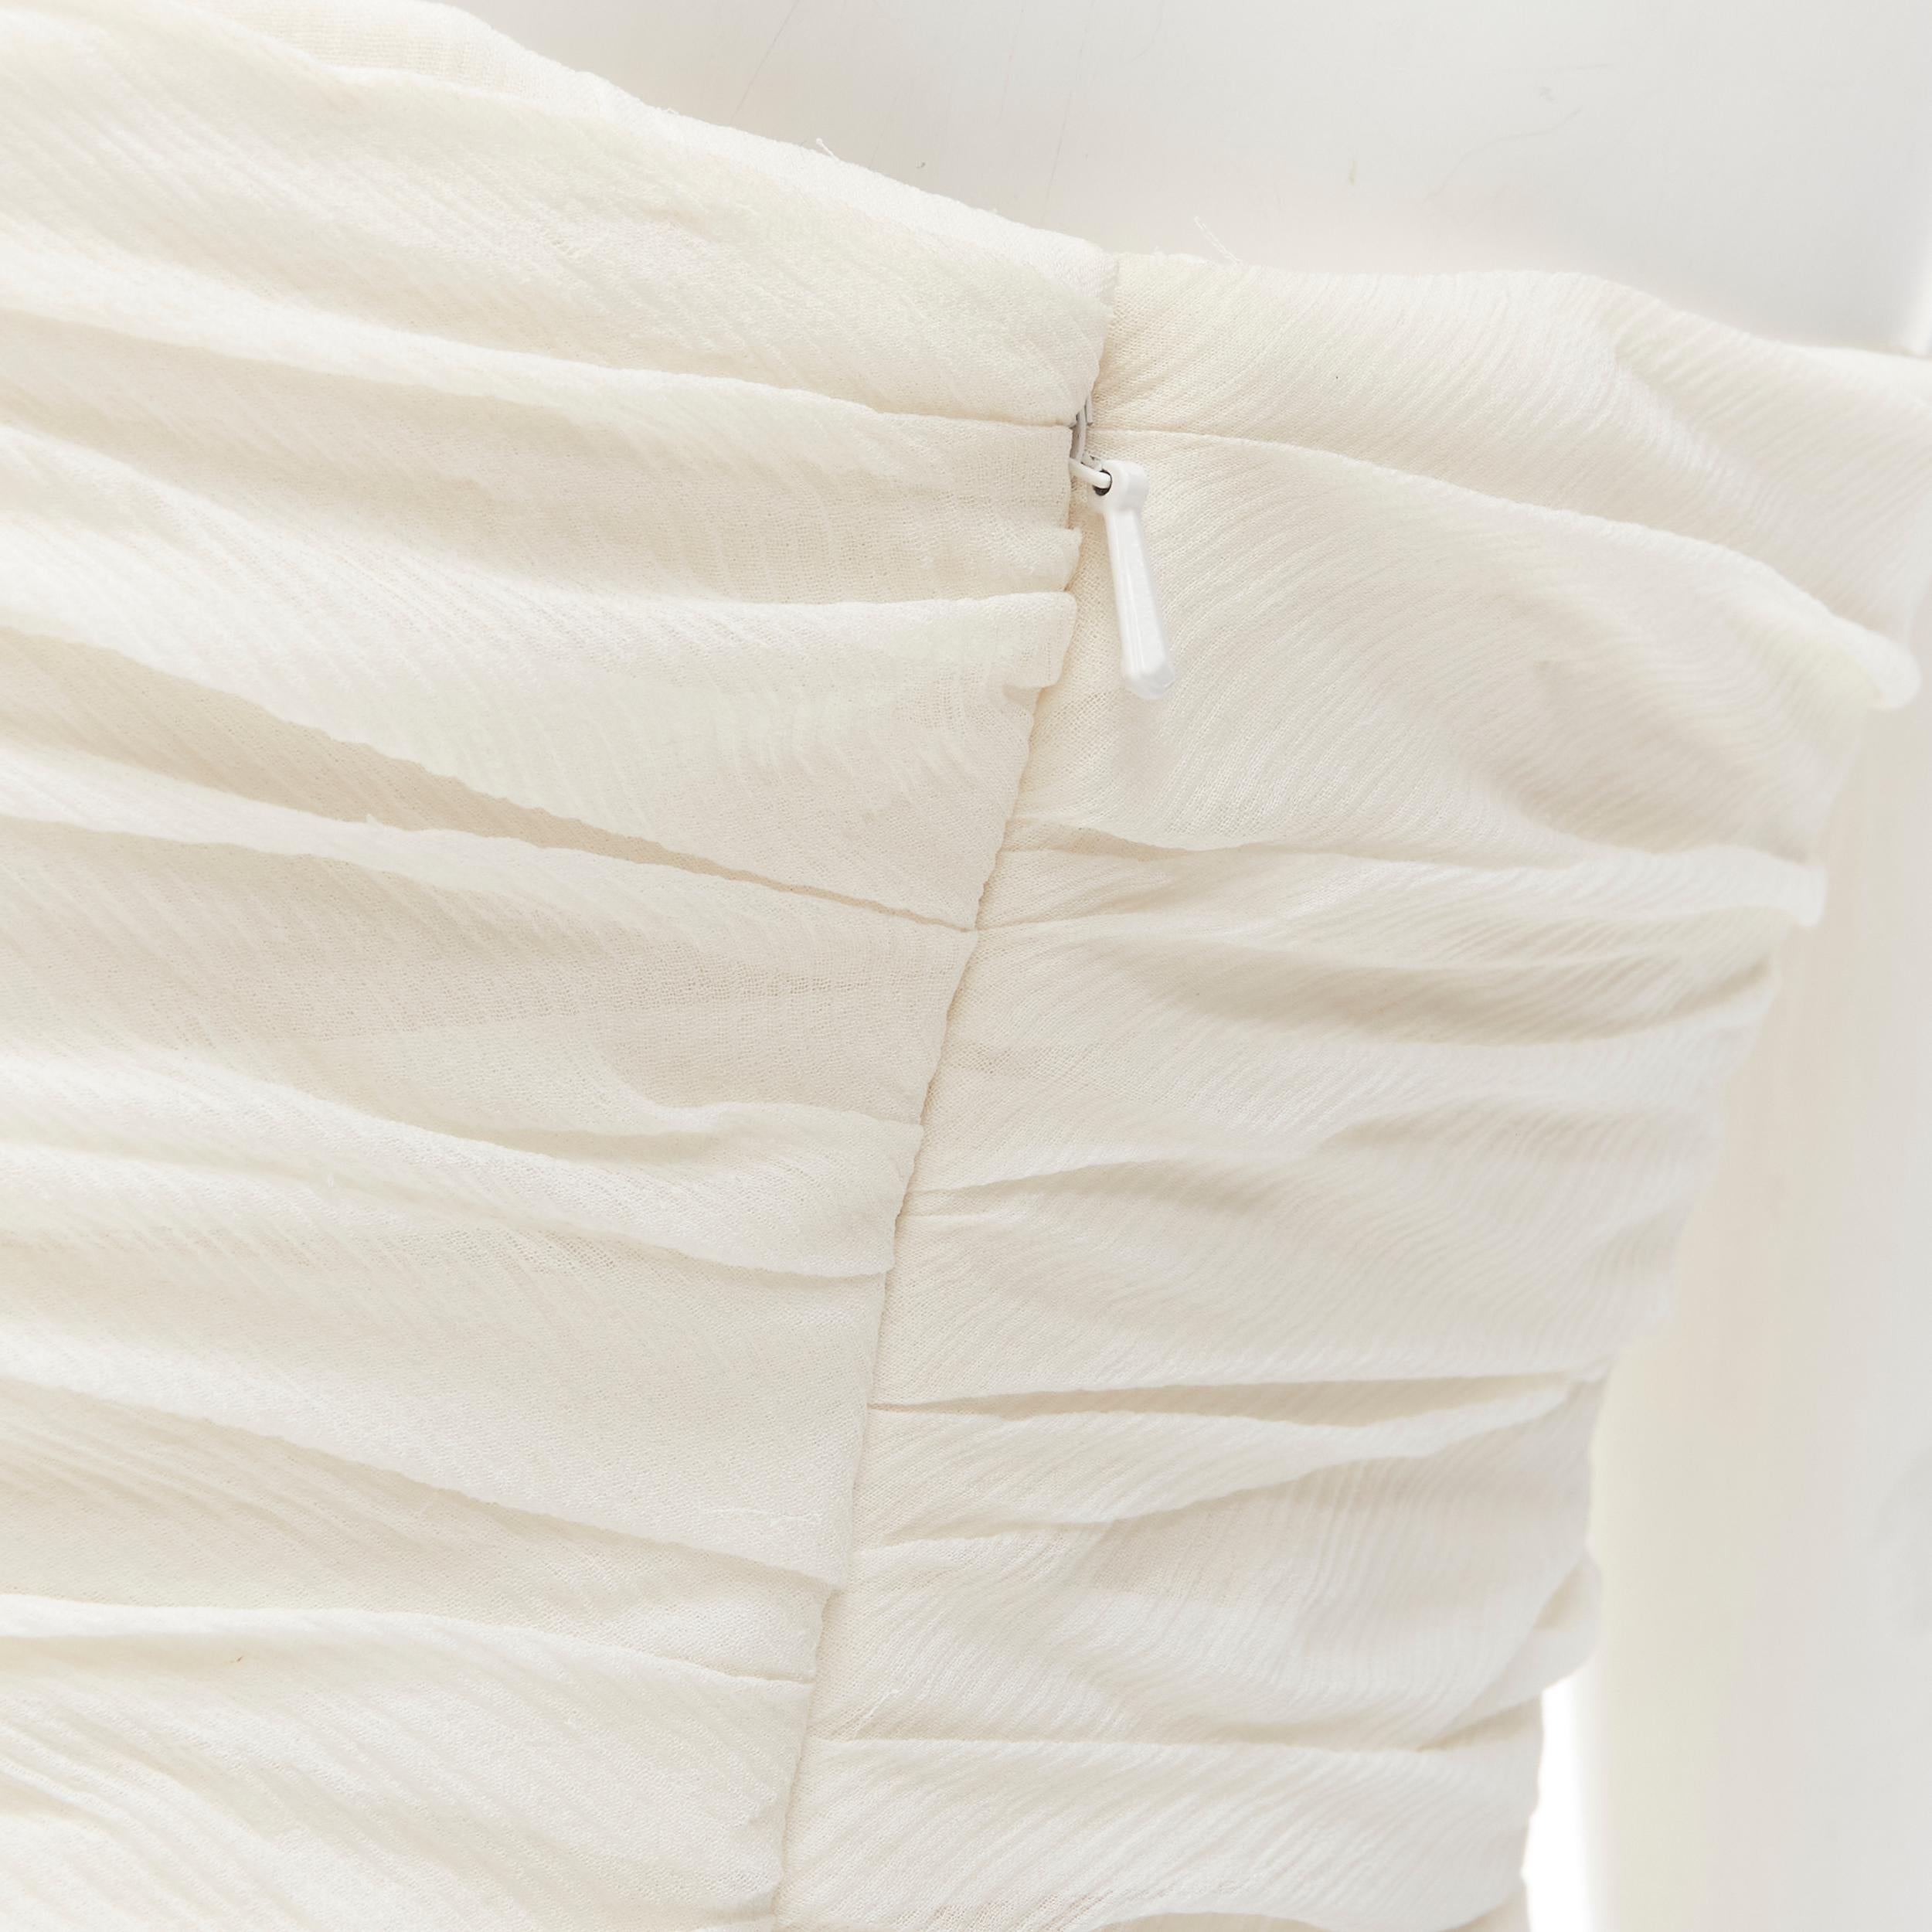 OSCAR DE LA RENTA ivory white boned corset strapless evening gown dress US0 XS 1